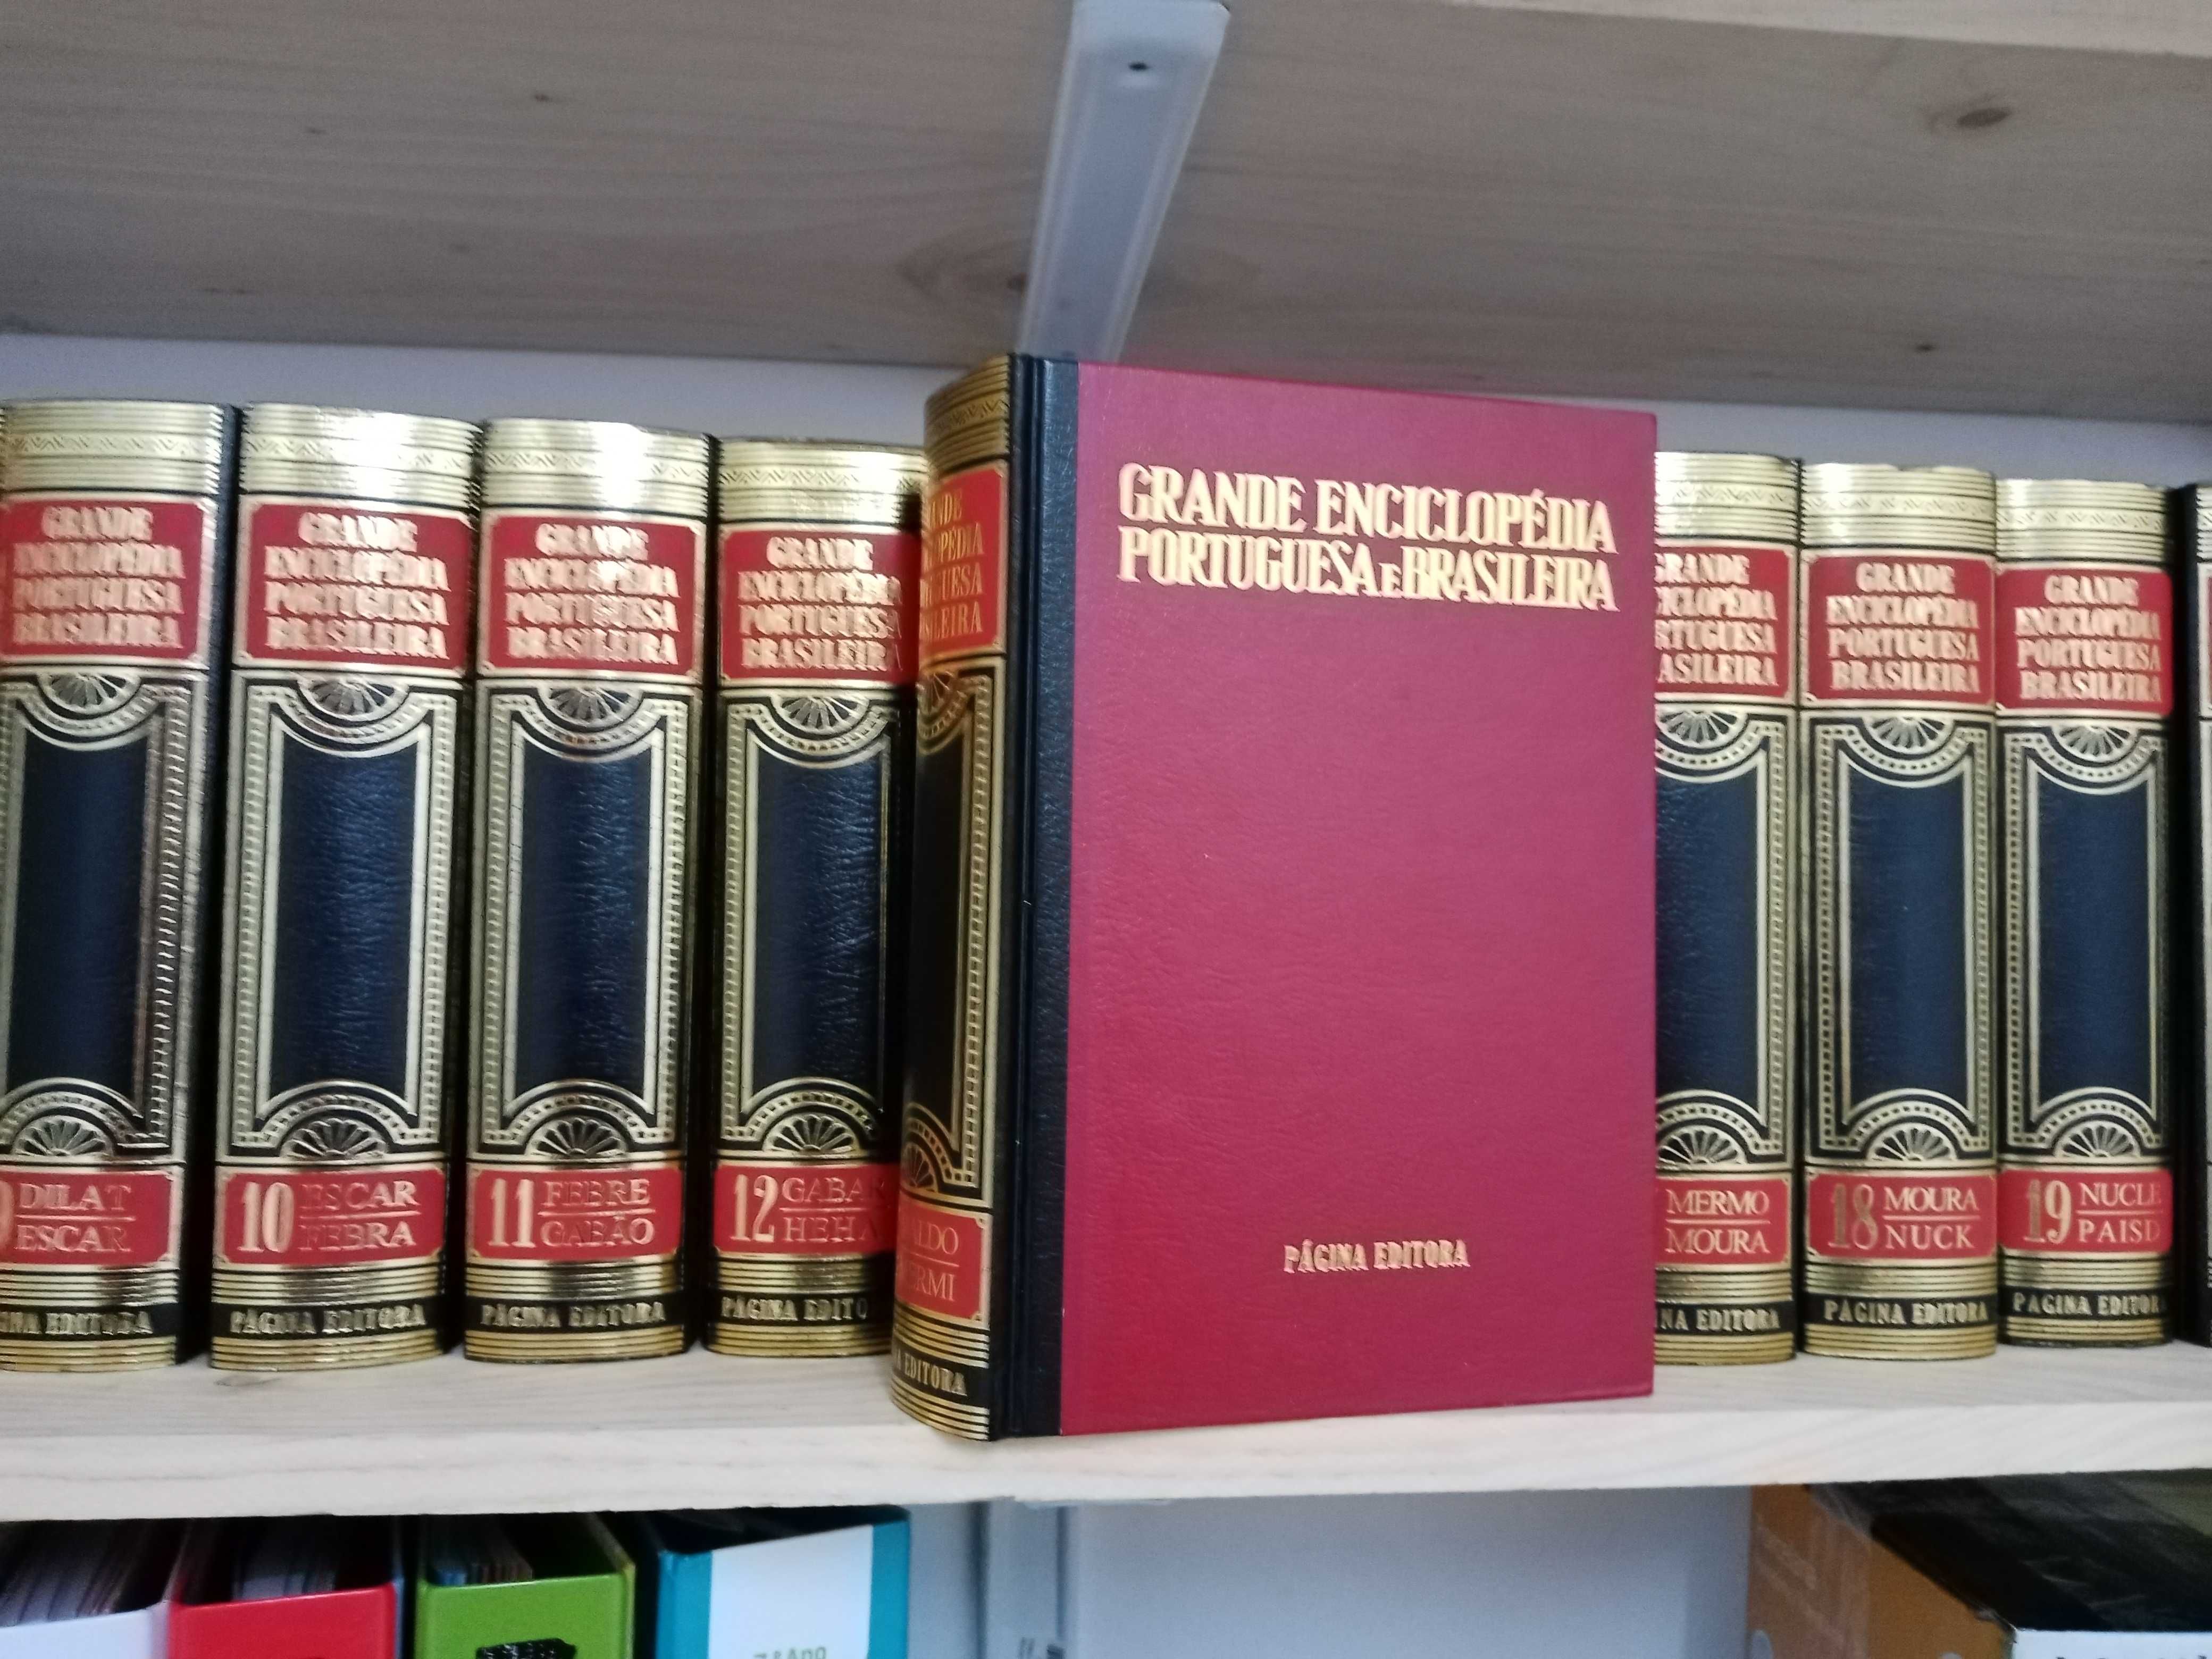 Enciclopédia Portuguesa Brasileira